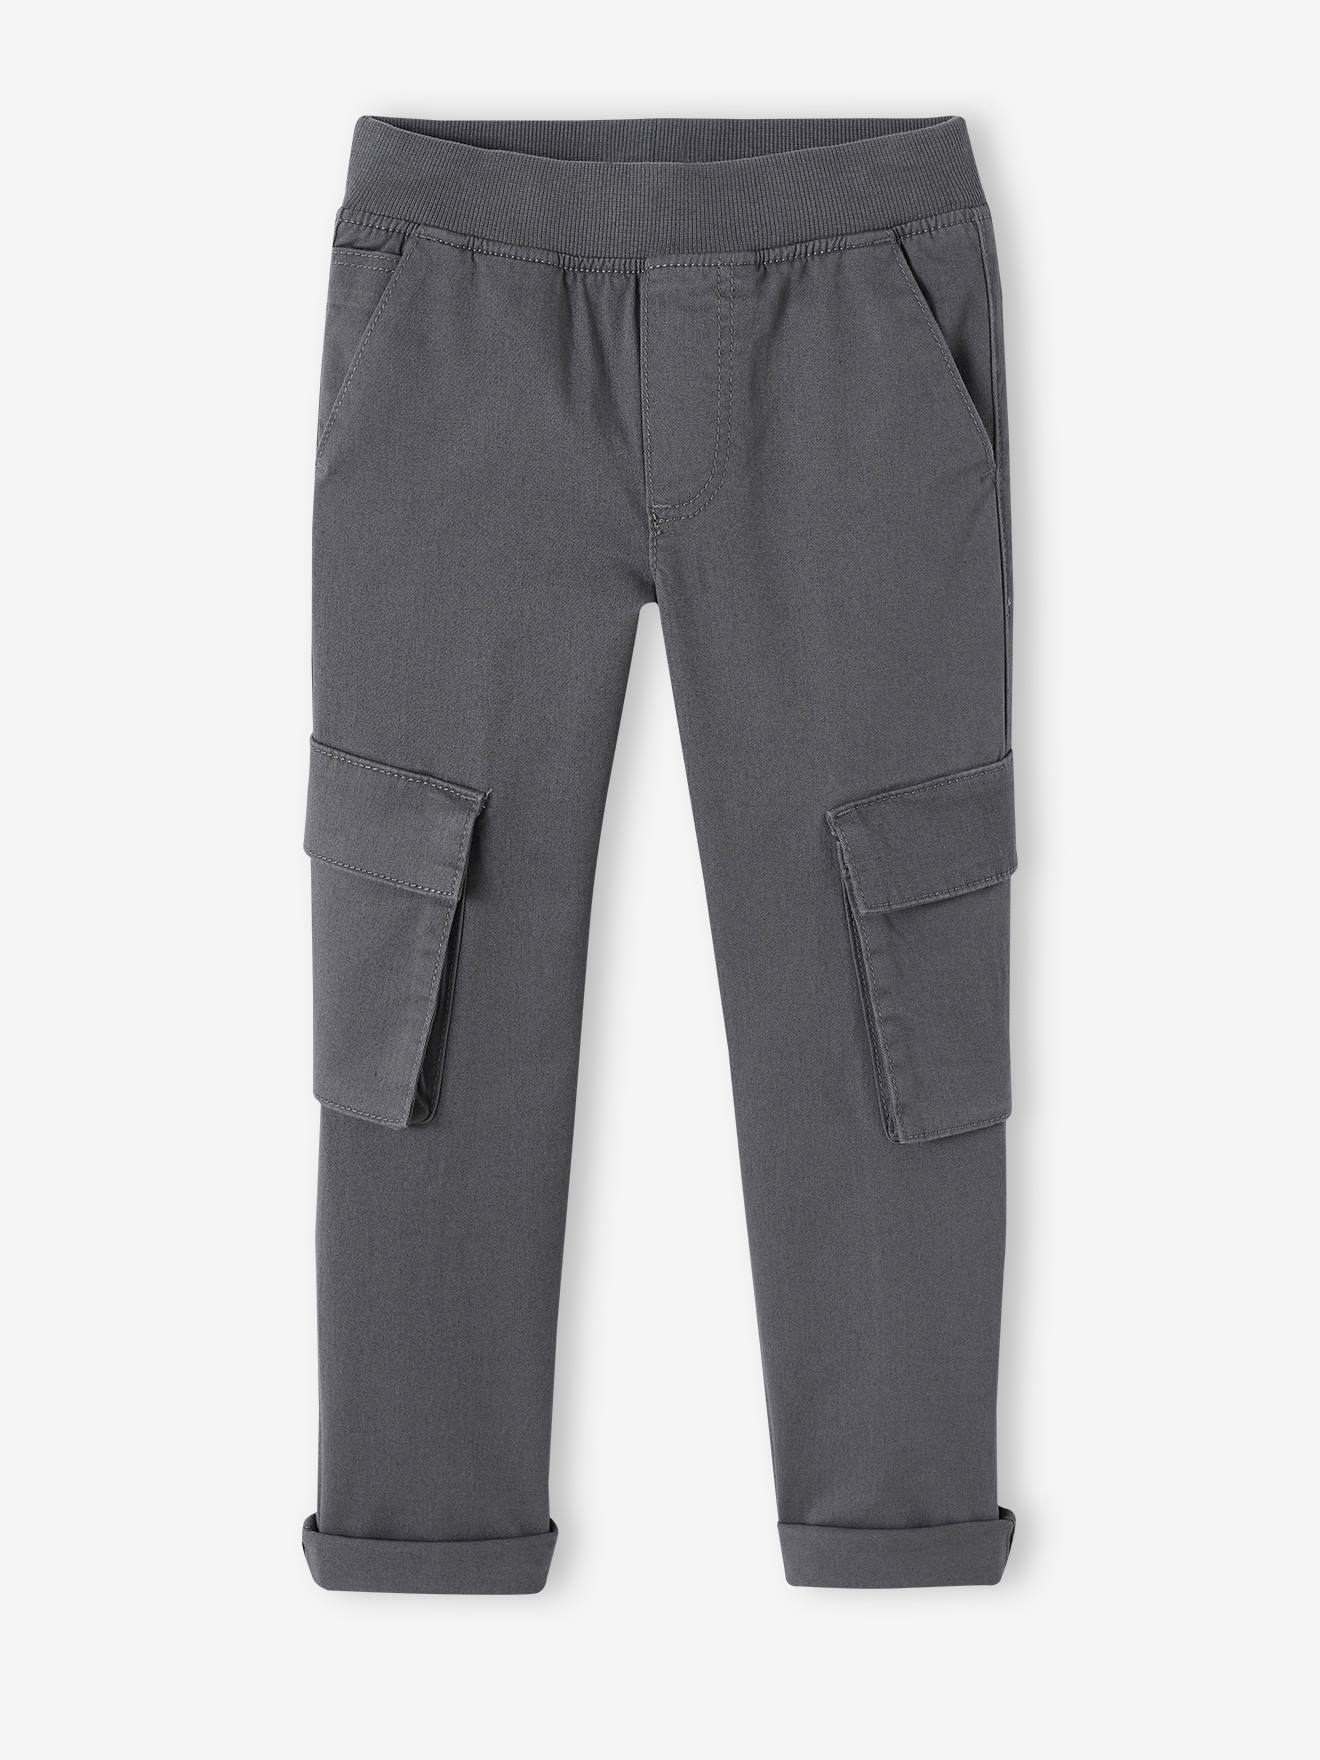 NARROW Hip Morphologik Cargo Trousers, Pull-Ons, for Boys slate grey